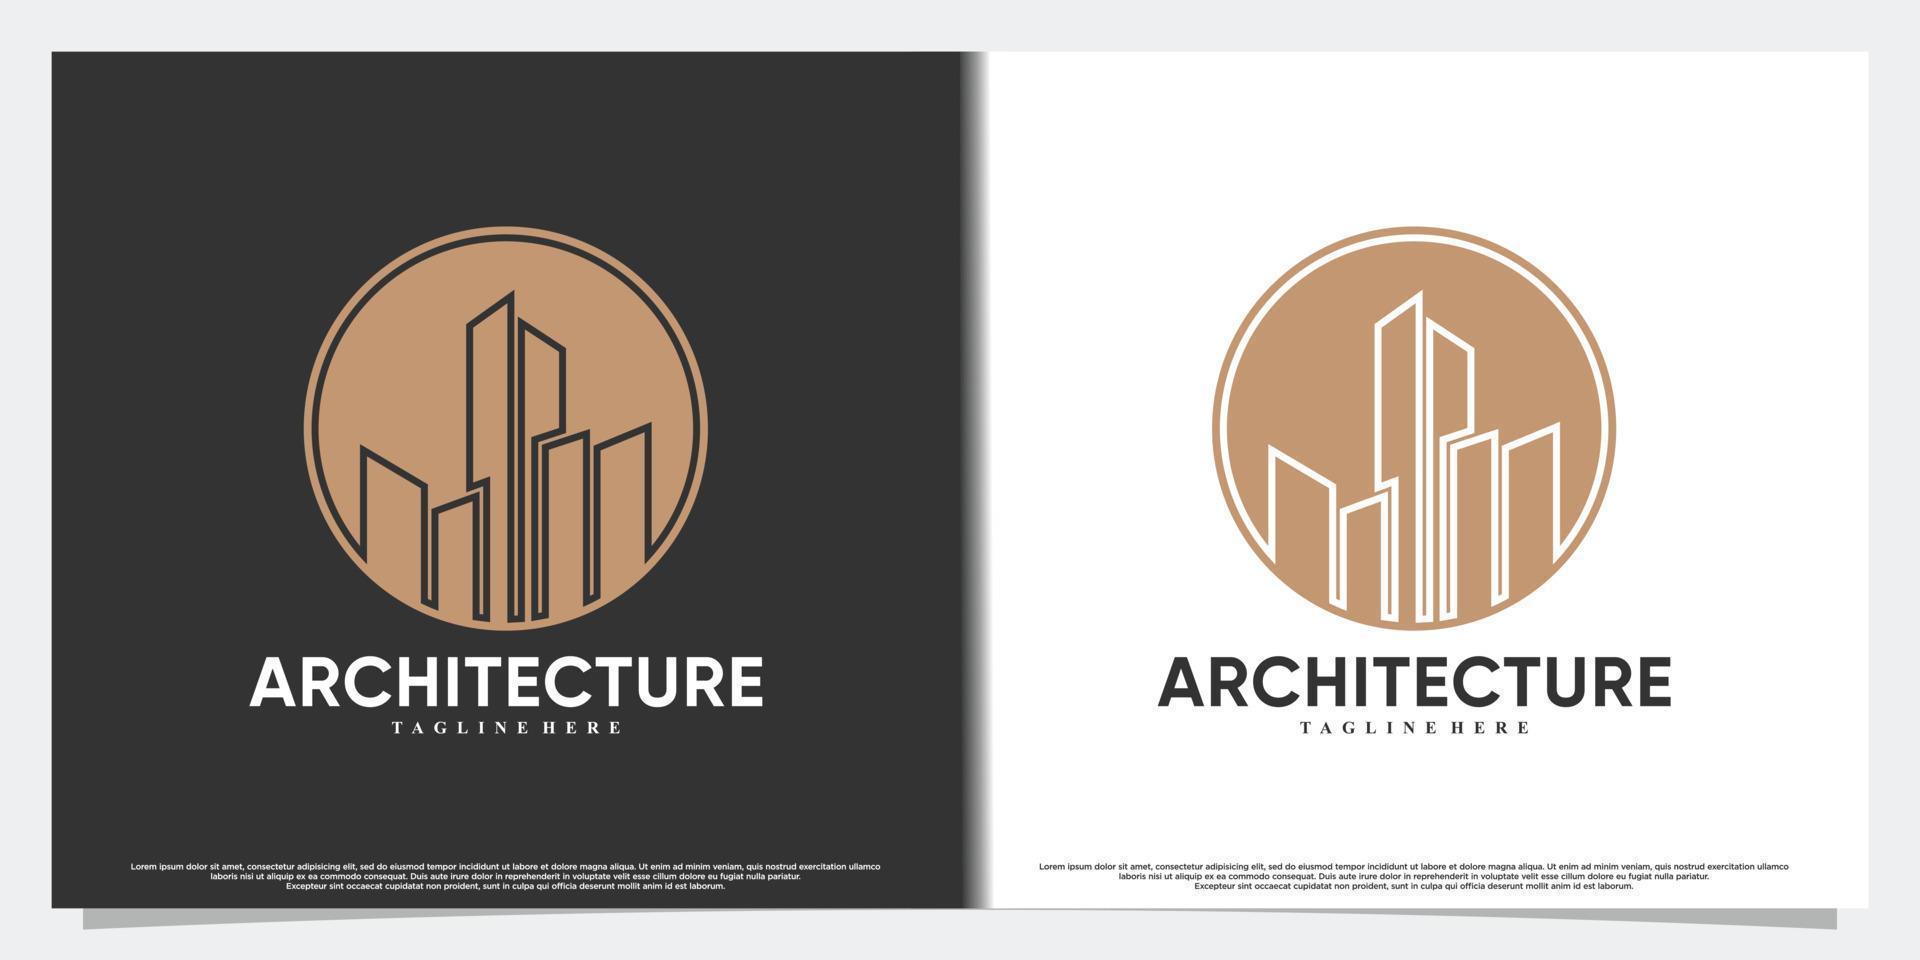 arkitektur ikon logotyp design med modern begrepp premie vektor